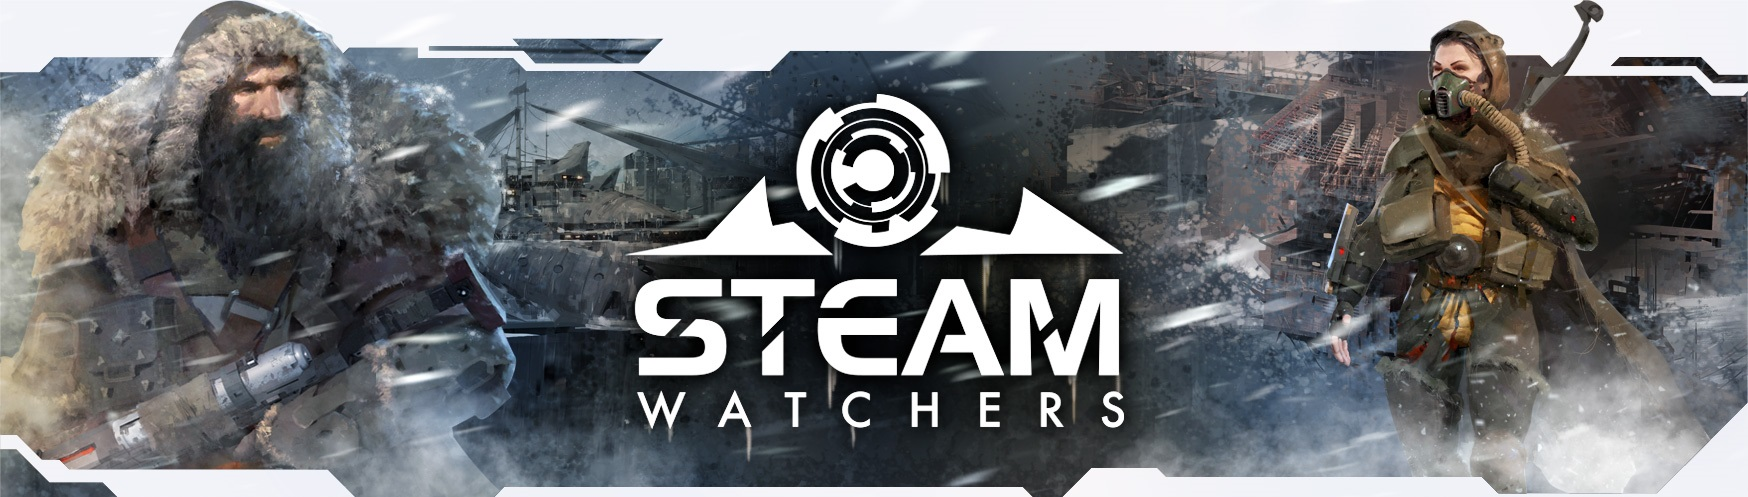 The Watchers on Steam